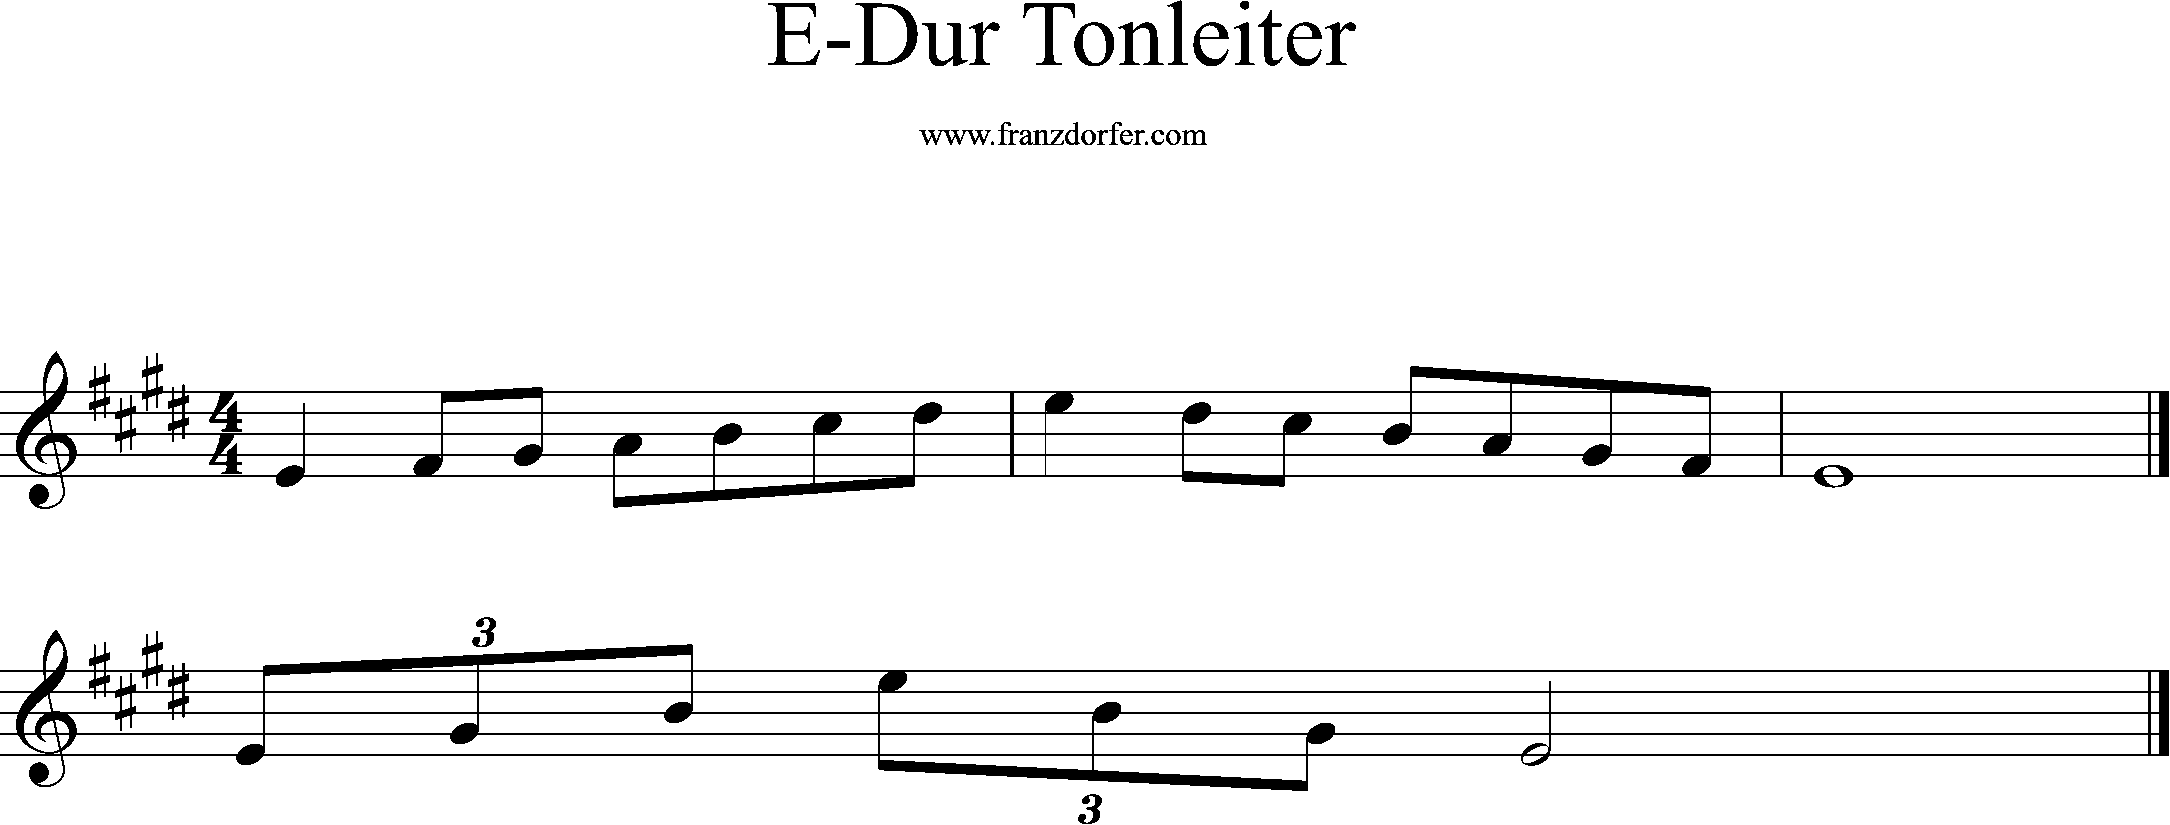 e-dur tonleiter, treble clef, e1-e2